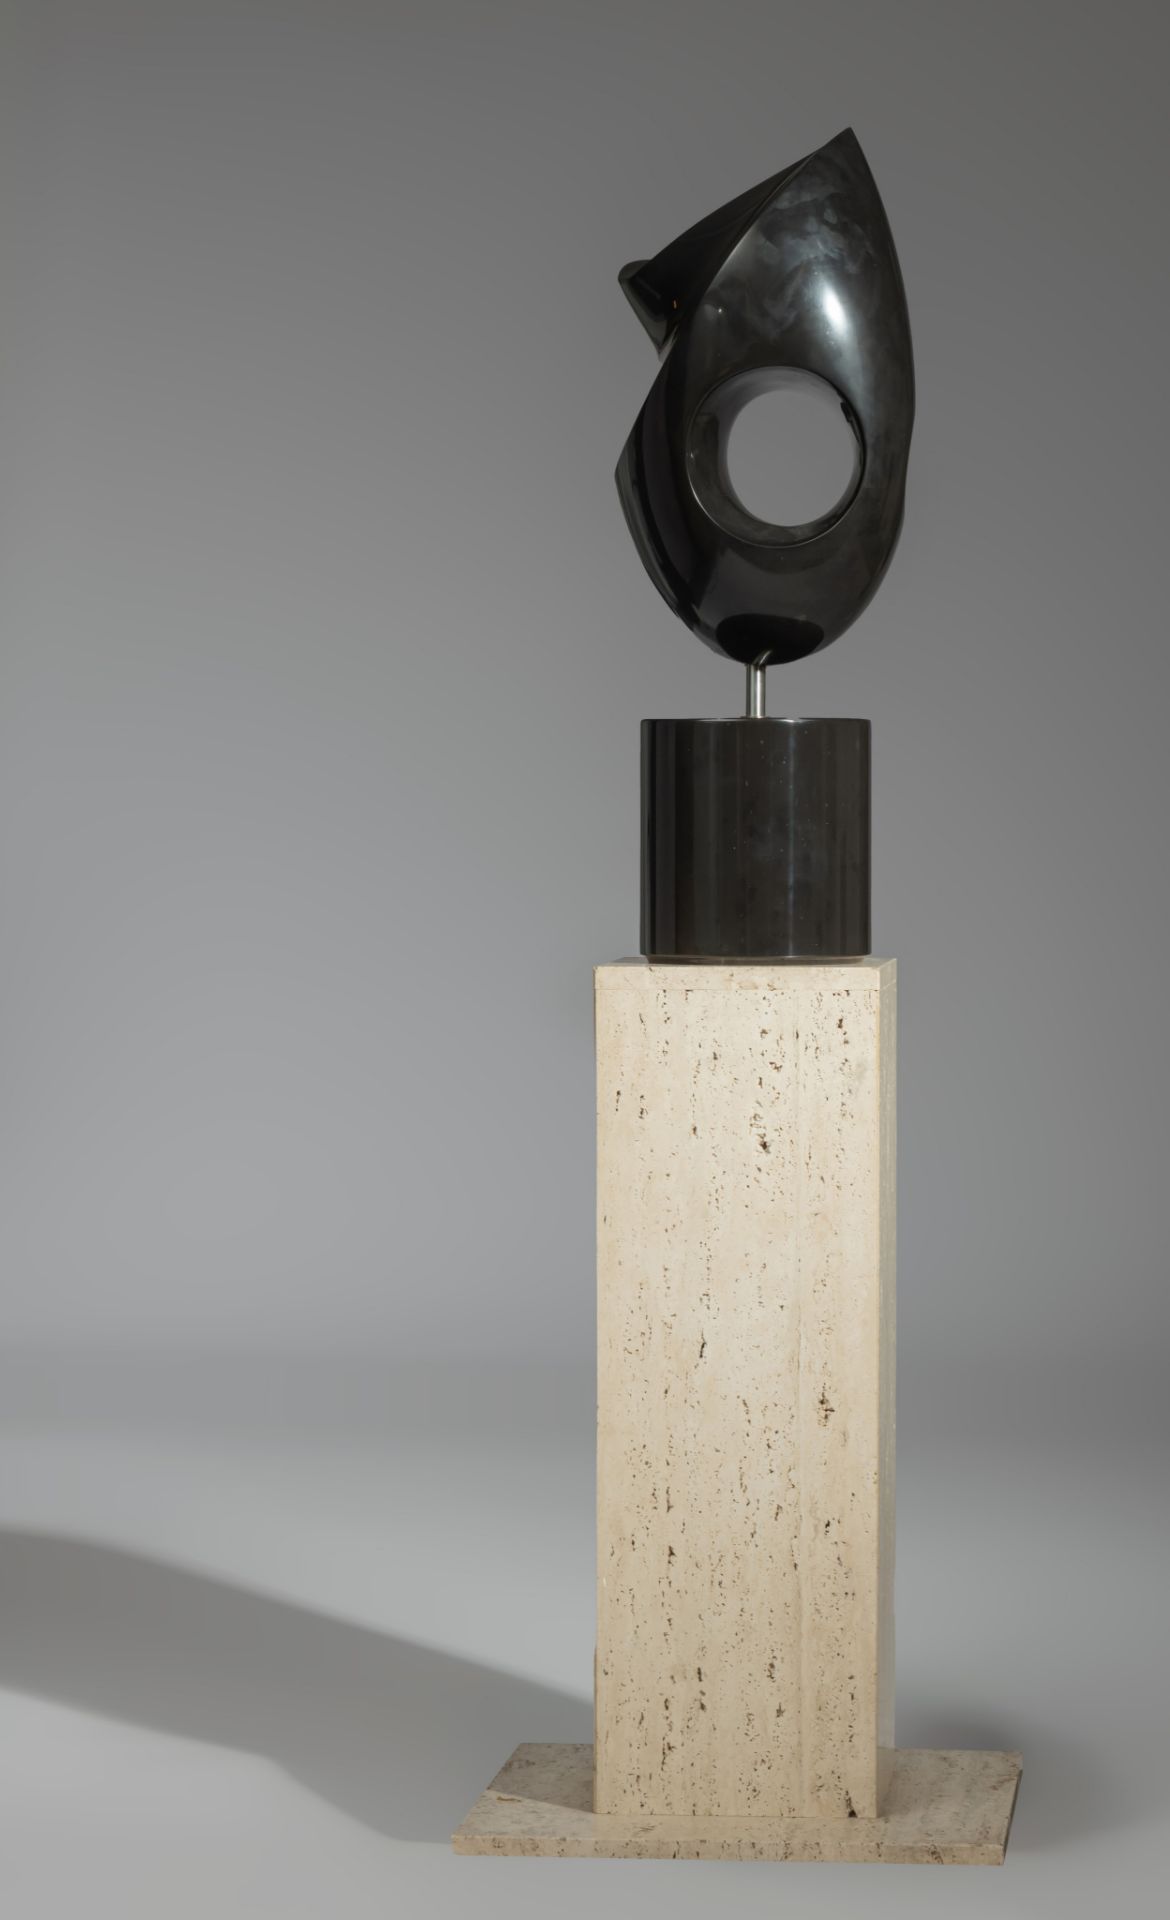 Jeanine Behaeghel (1940-1993), abstract sculpture, 1988, noir Belge marble on a travertine pedestal, - Image 12 of 18